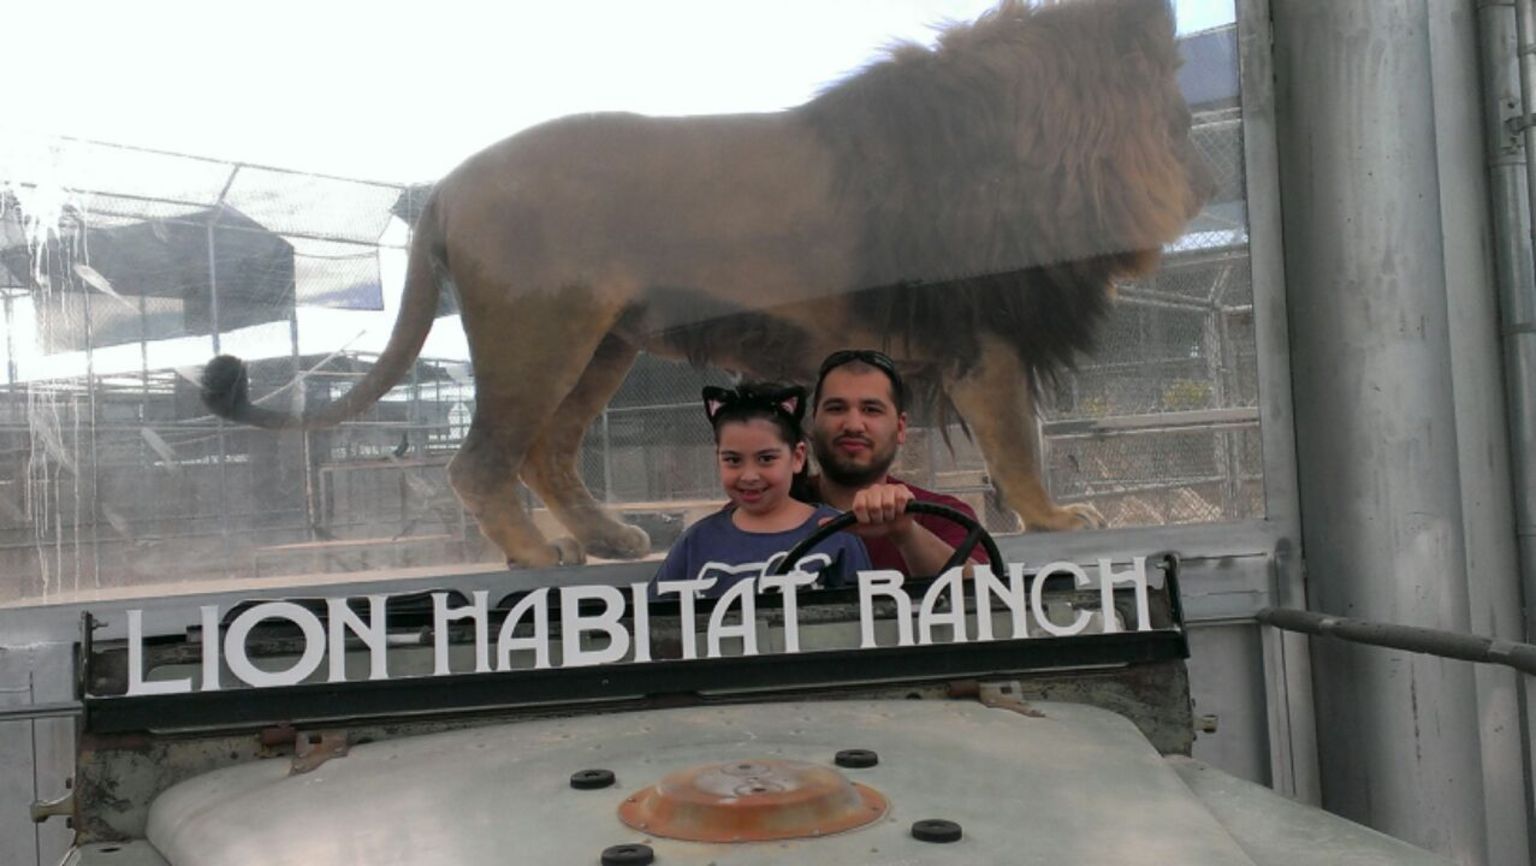 Our trip at the Lion Habitat